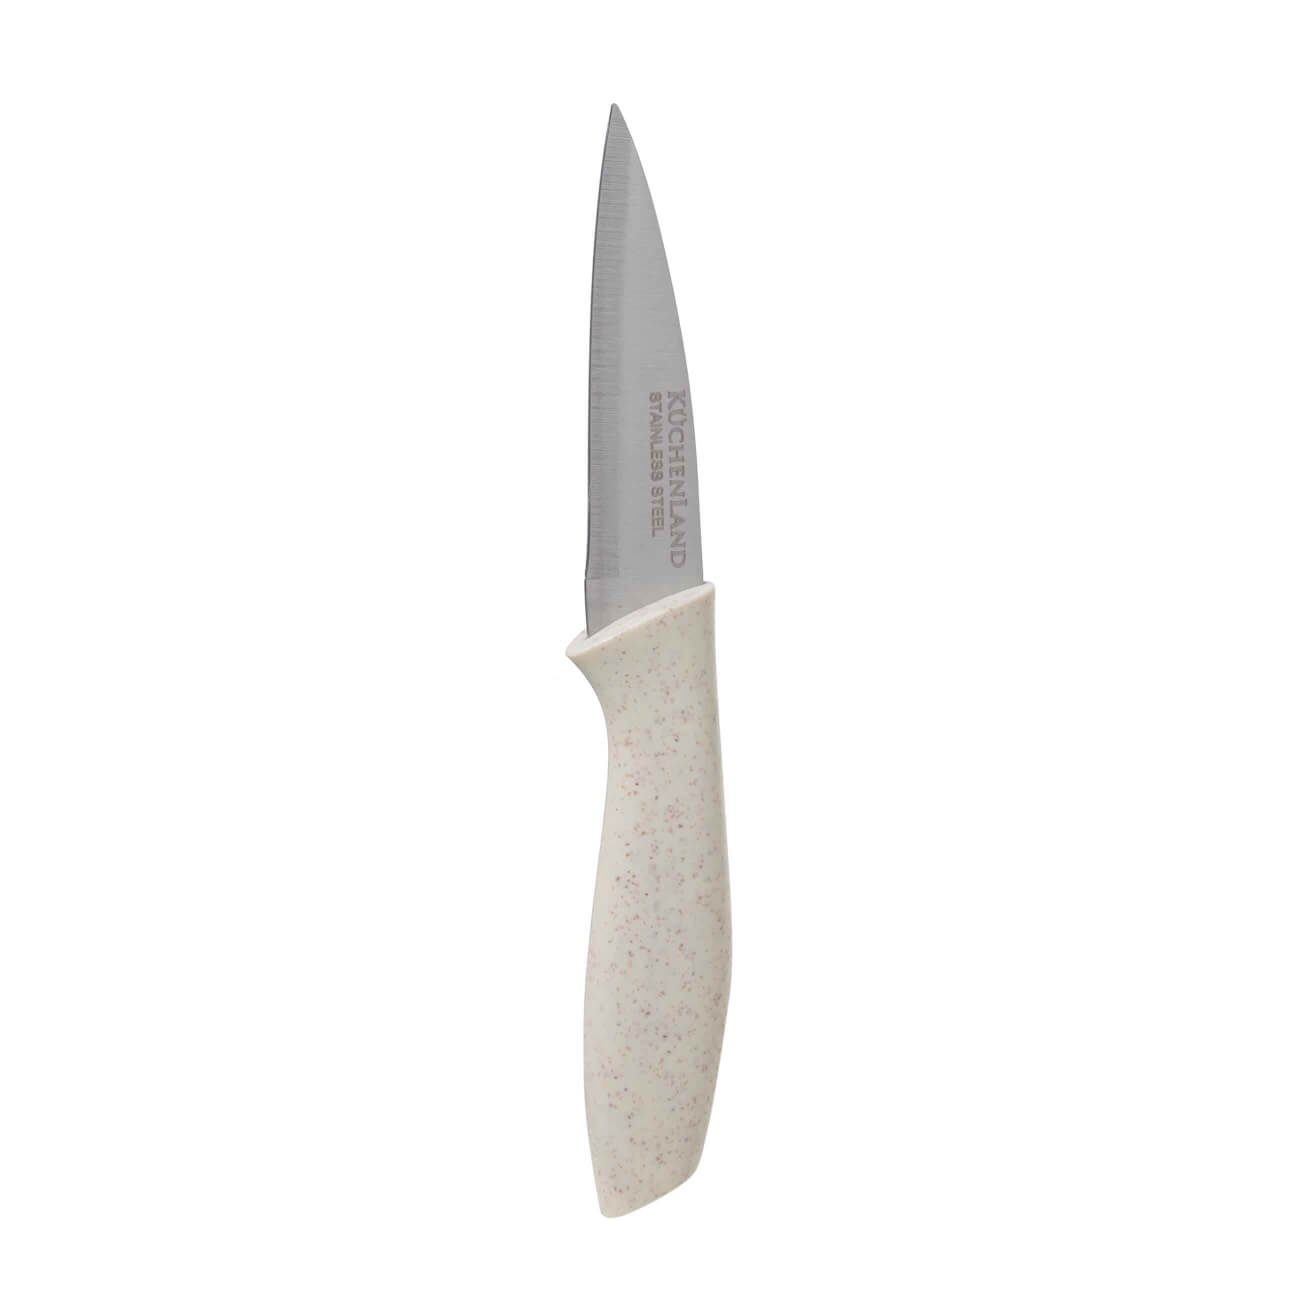 Нож для чистки овощей, 9 см, сталь/пластик, молочный, Speck-light нож кухонный daniks мрамор для овощей нержавеющая сталь 9 см рукоятка сталь yw a156 pa